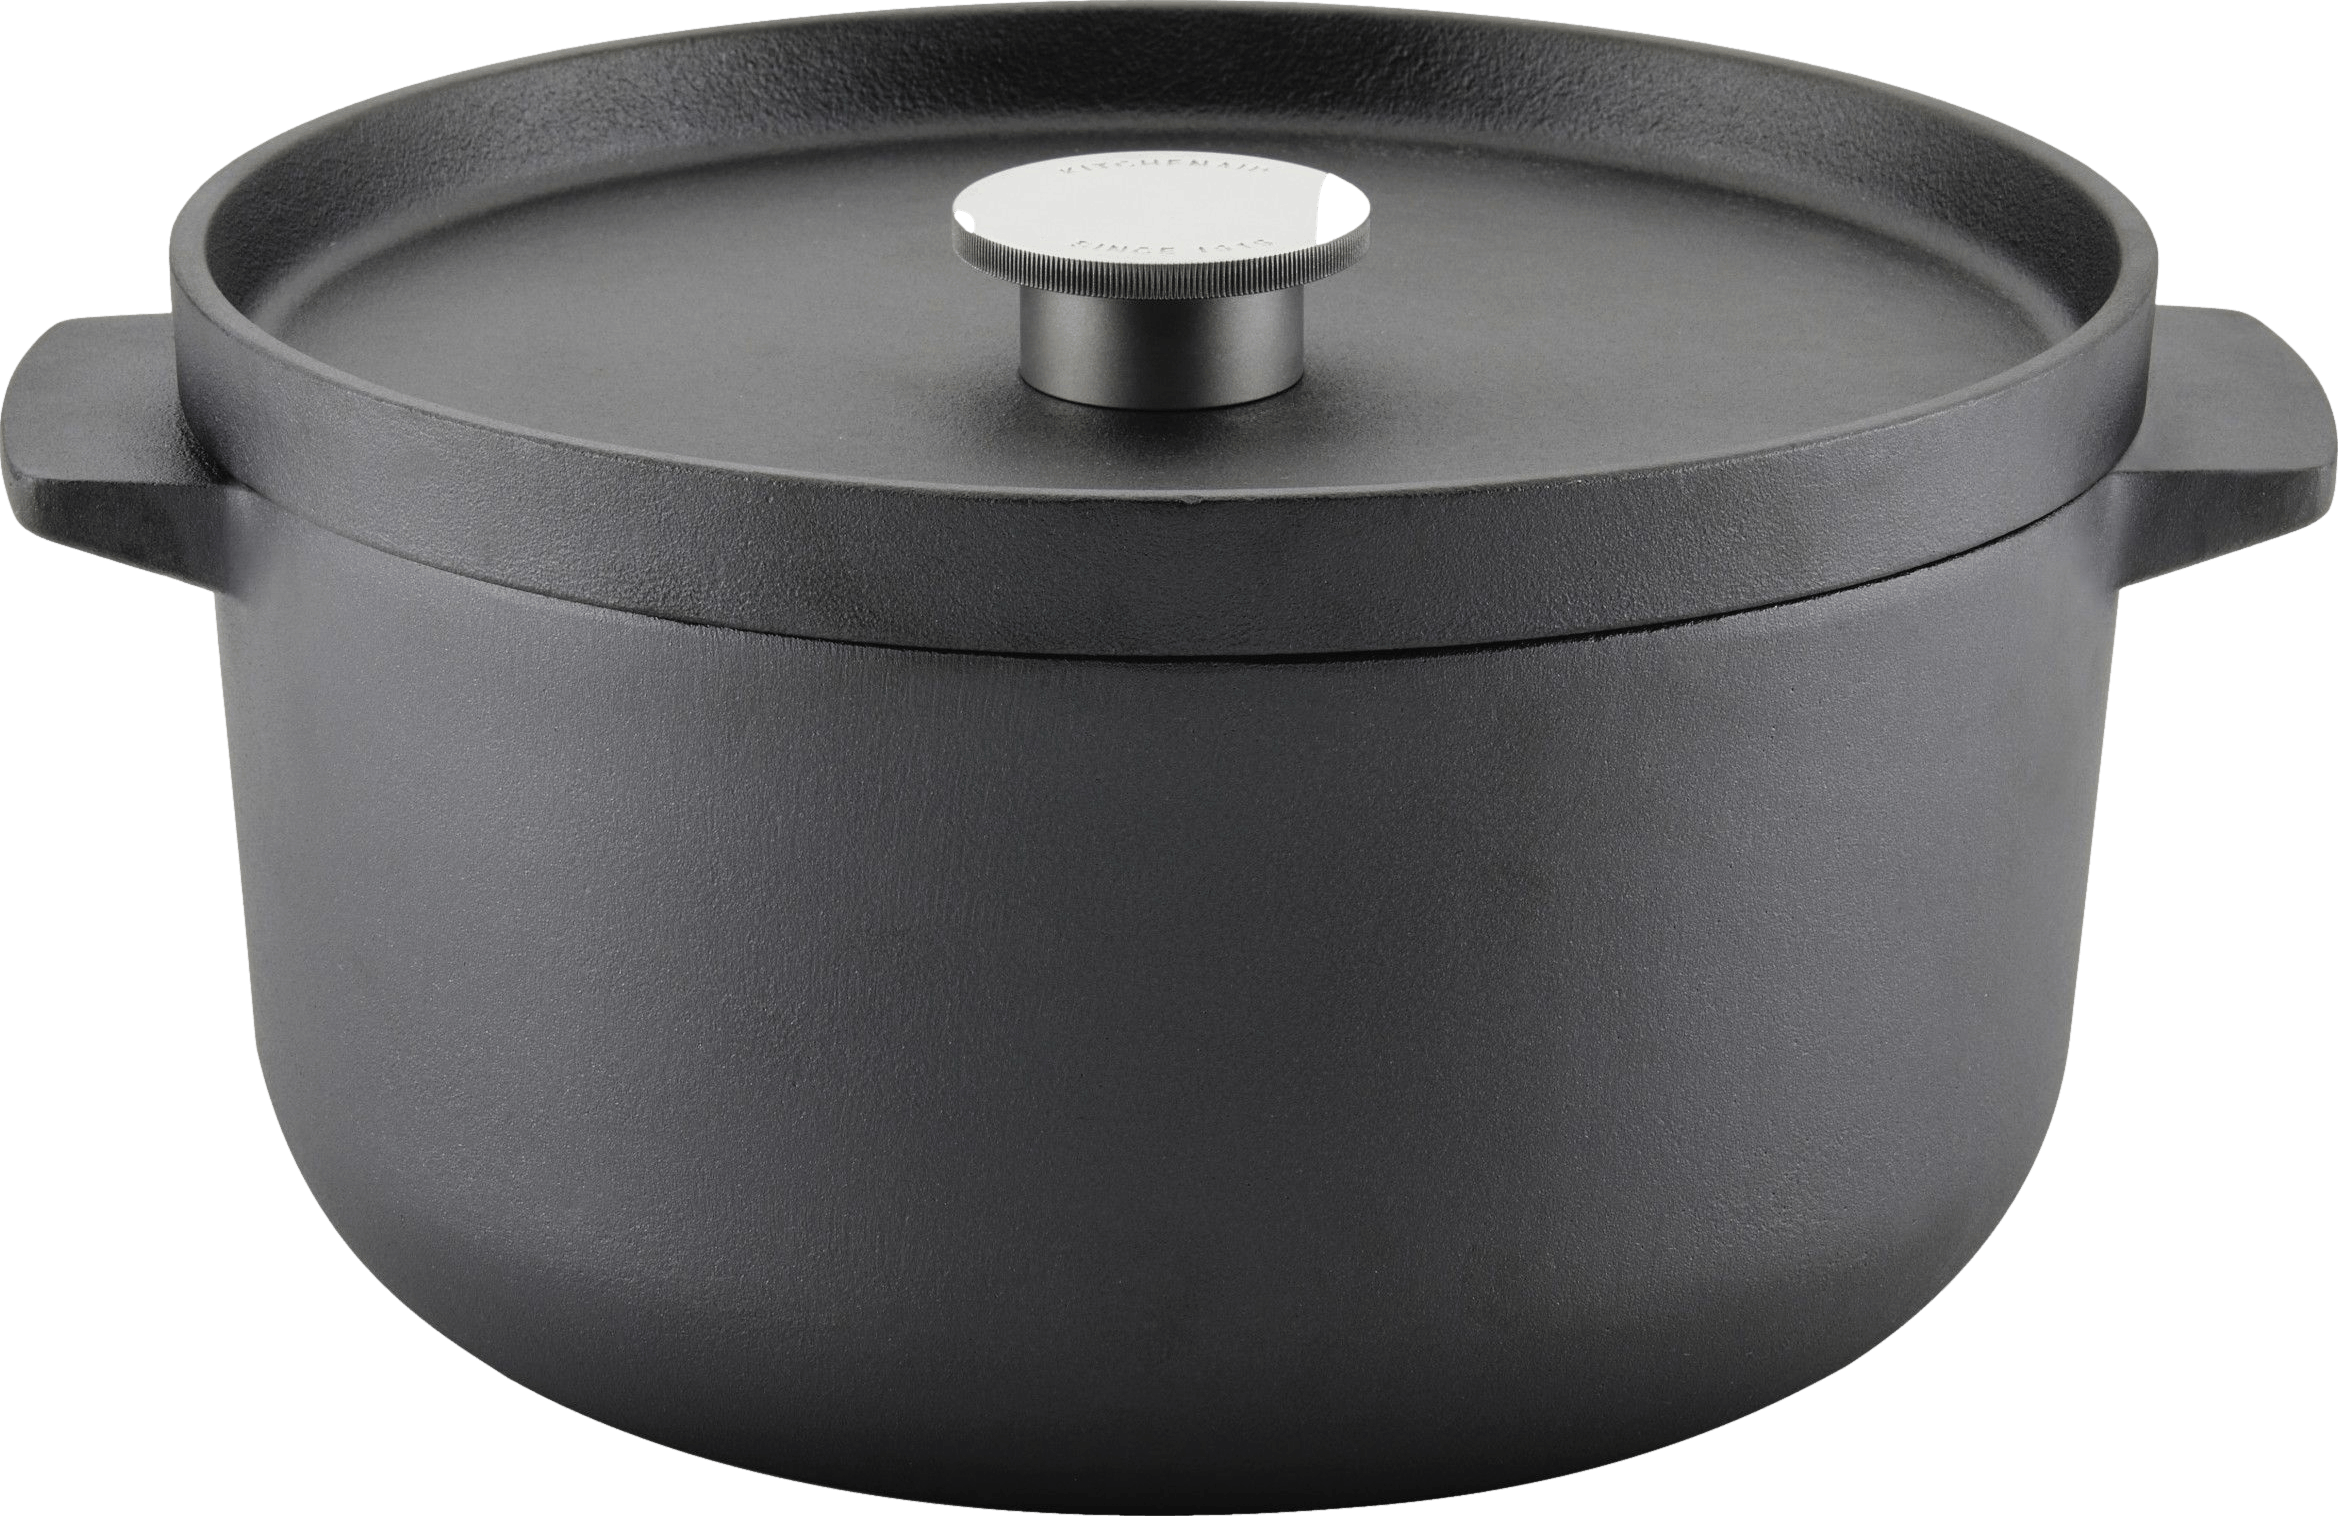 GreenPan Rio 6qt Covered Stock Pot with Strainer - Black 6 qt